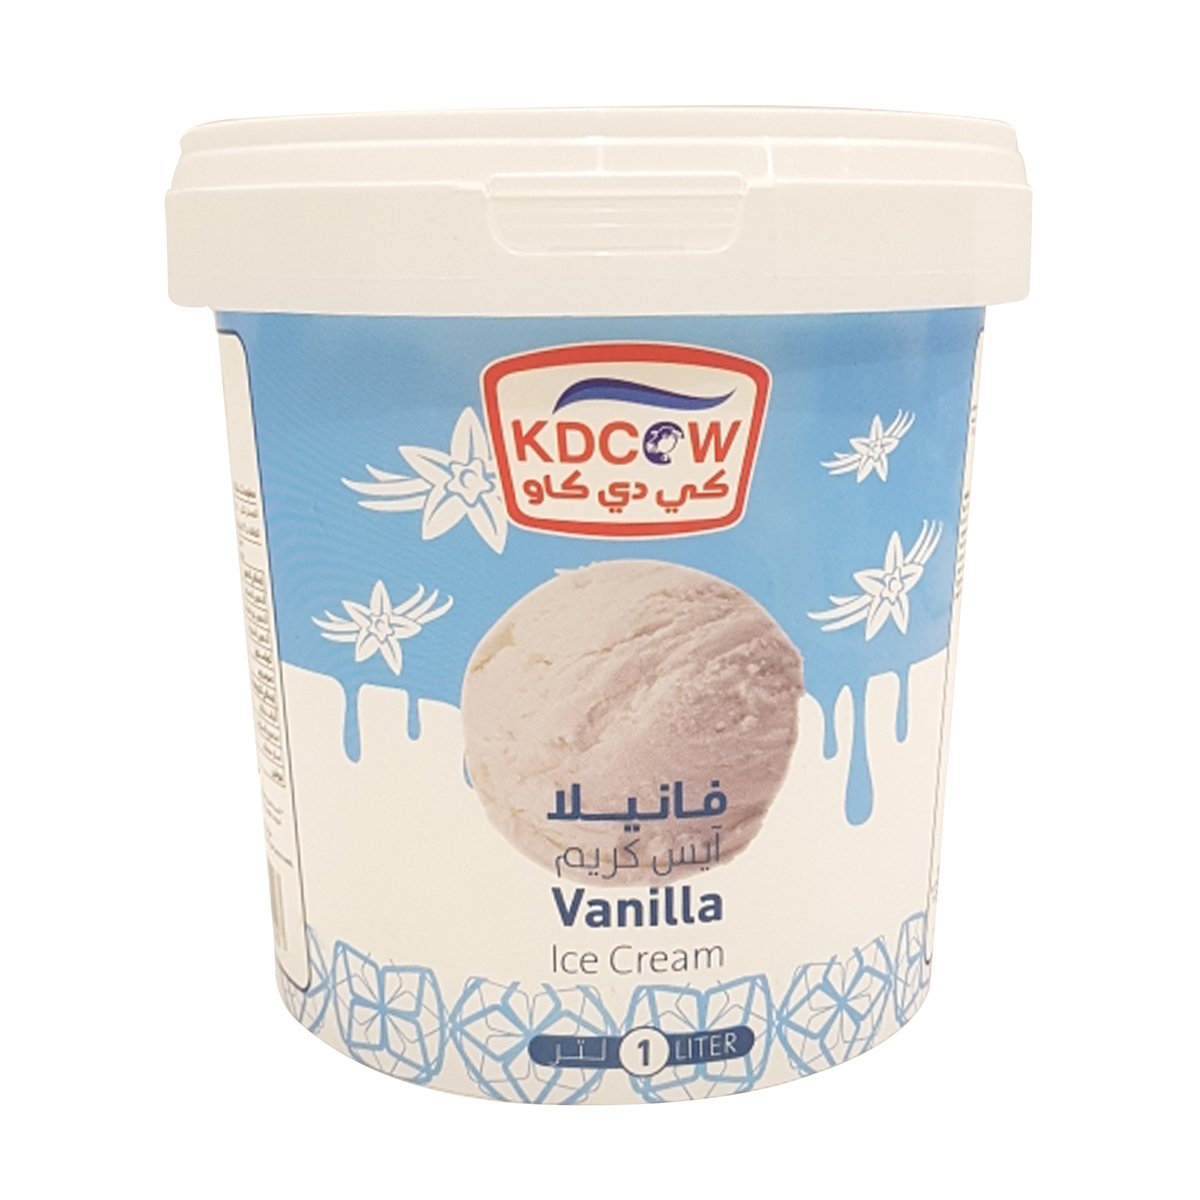 Kdcow Vanilla Ice Cream 1Litre